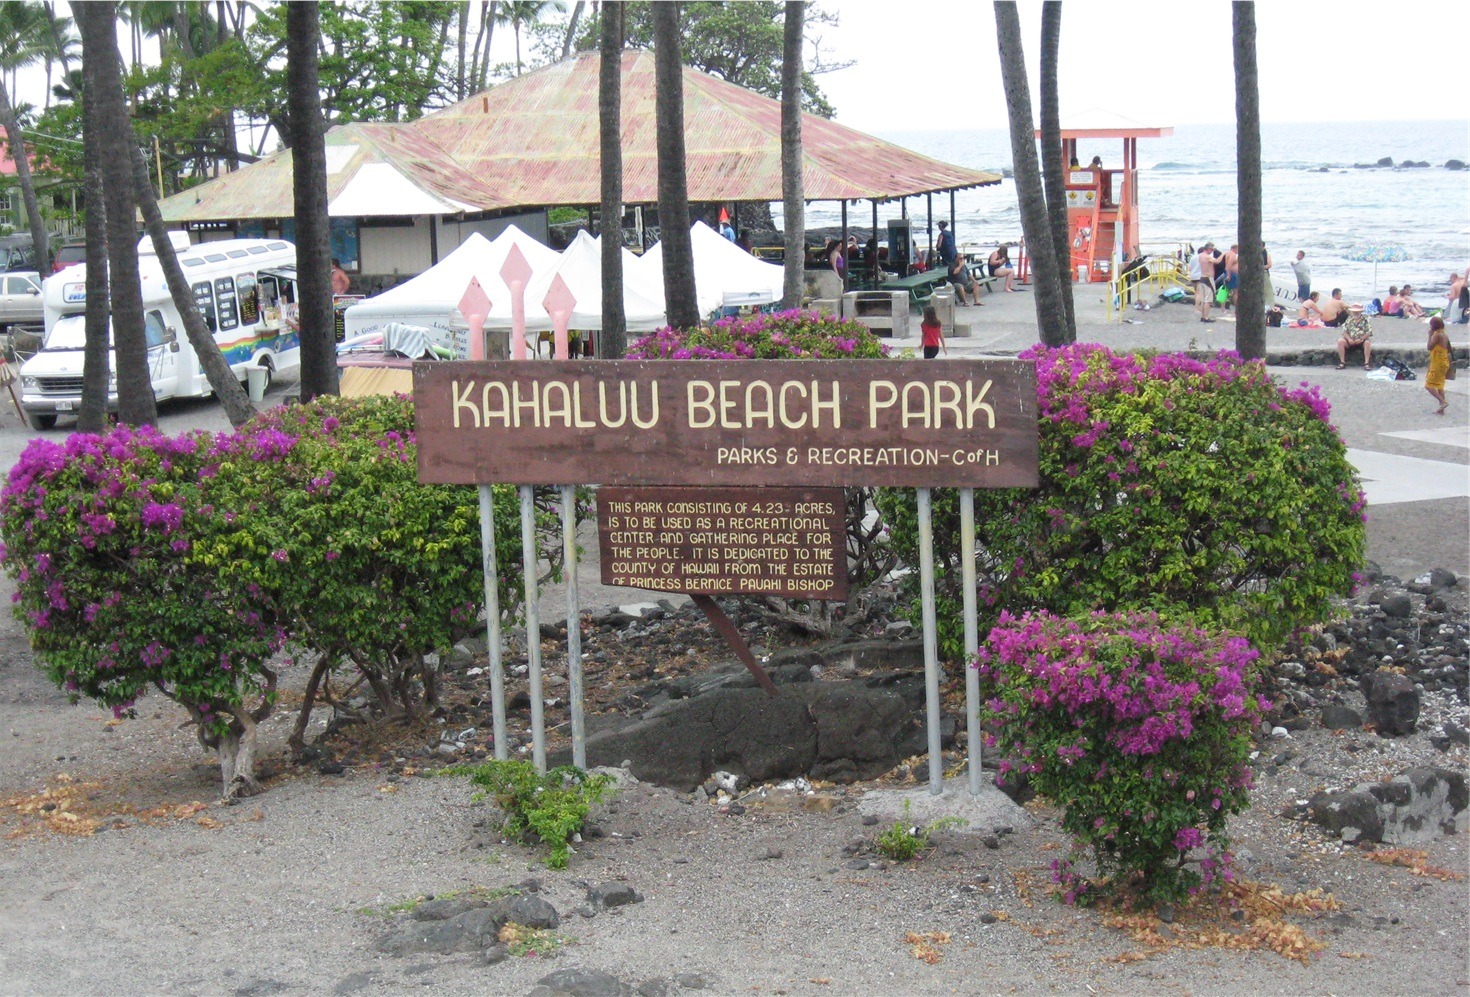 entrance of Kahalu’u Beach Park in Hawaii which is a popular snorkeling spot